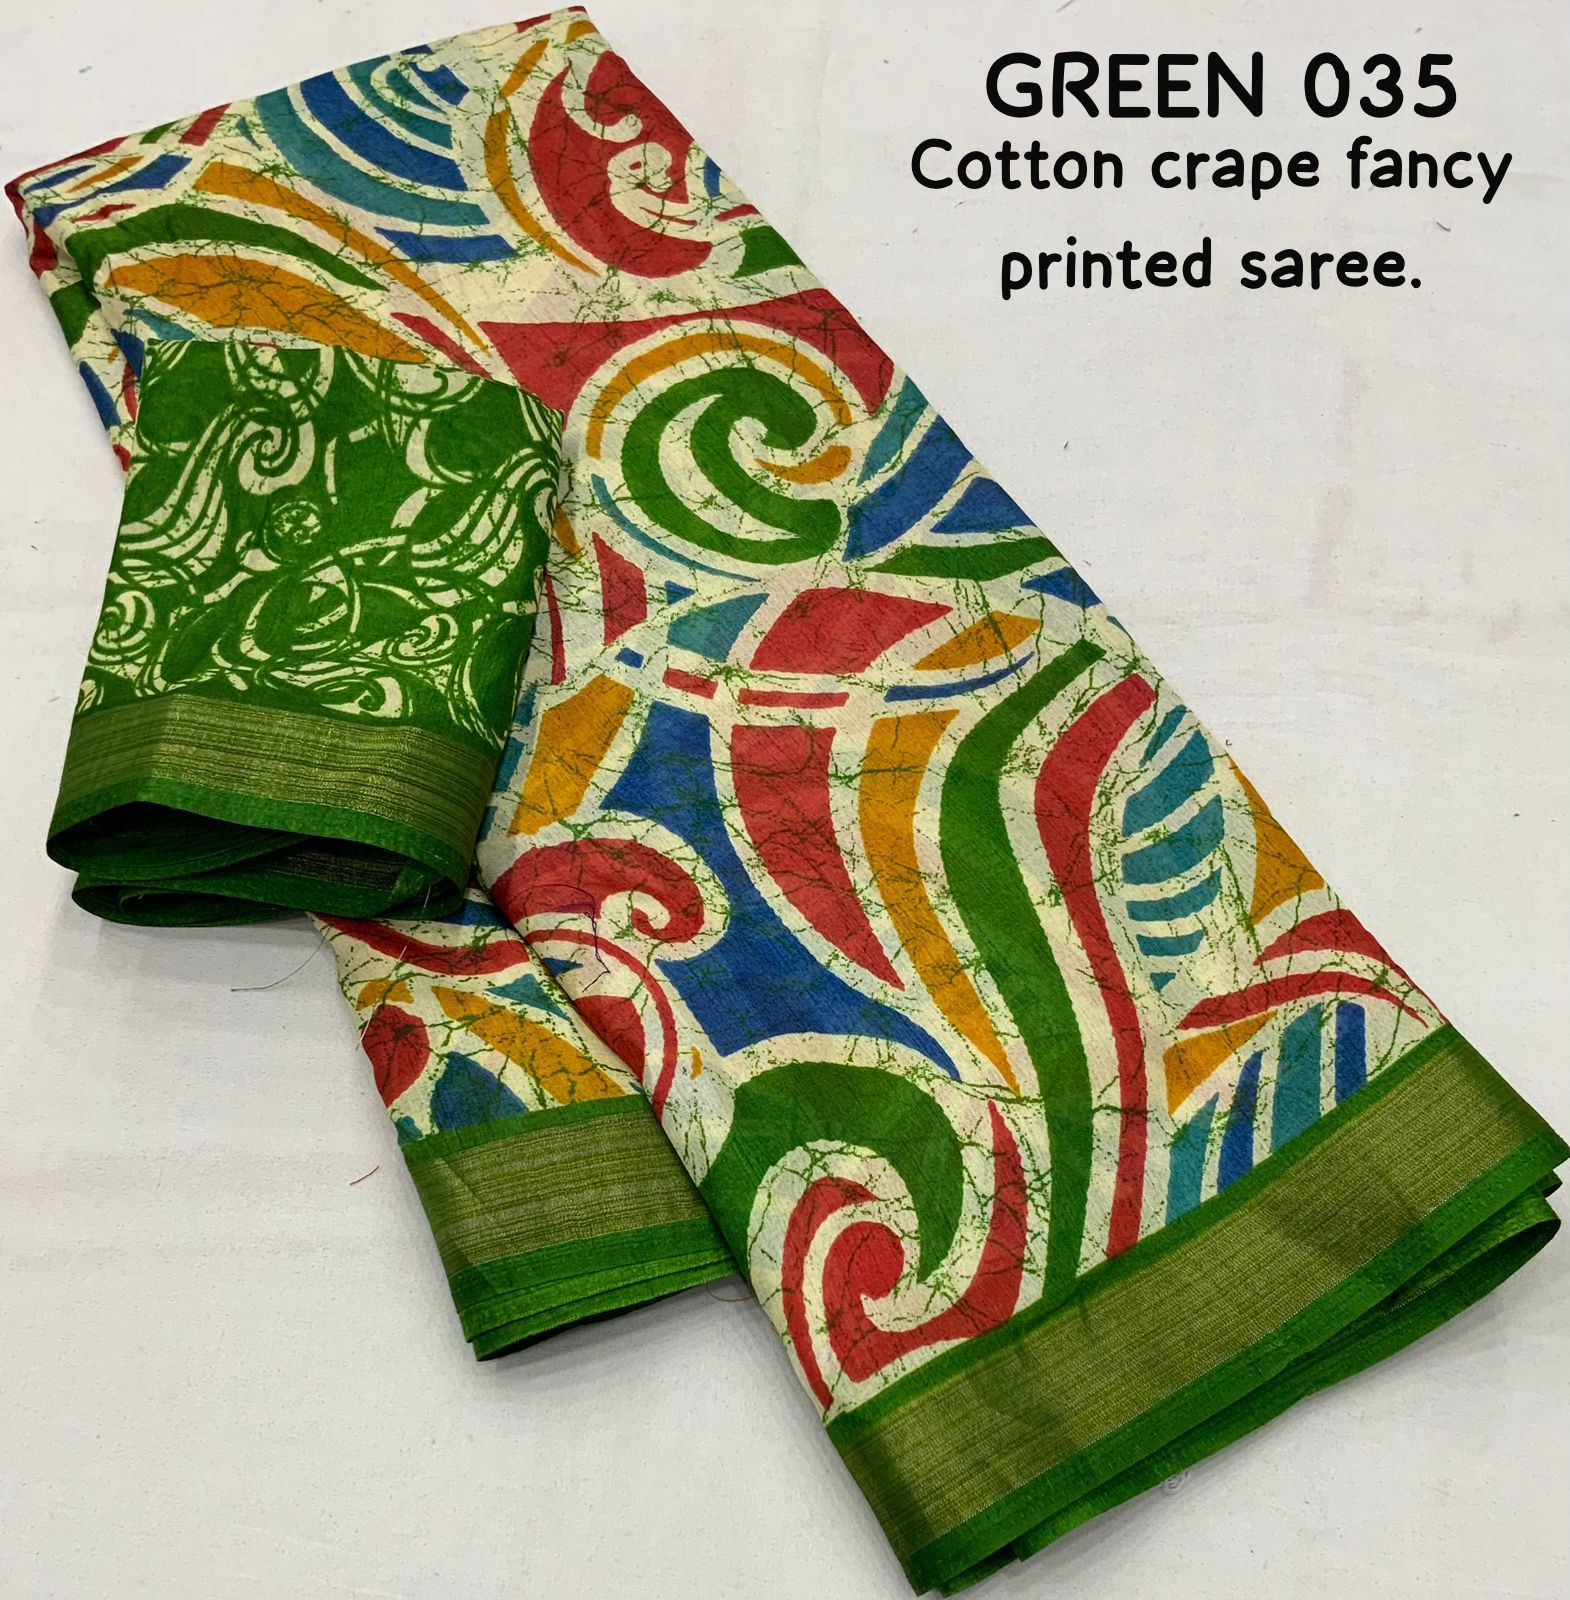 Soft cotton crape batik printed saree - Green